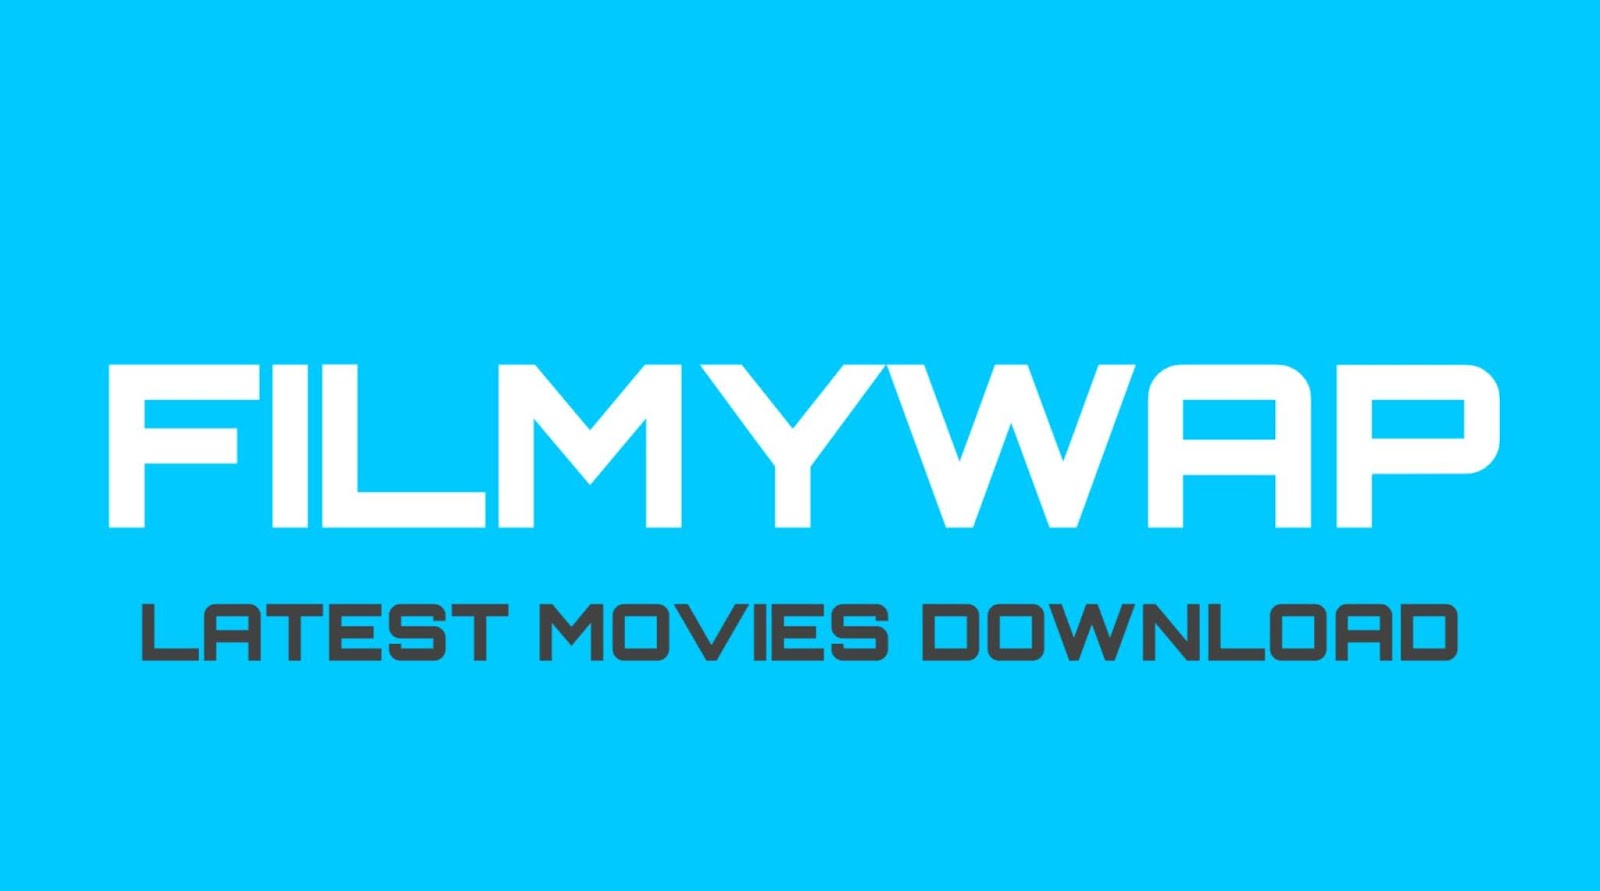 Filmywap 2019 Download Latest Movies Hindi Punjabi English Dubbed